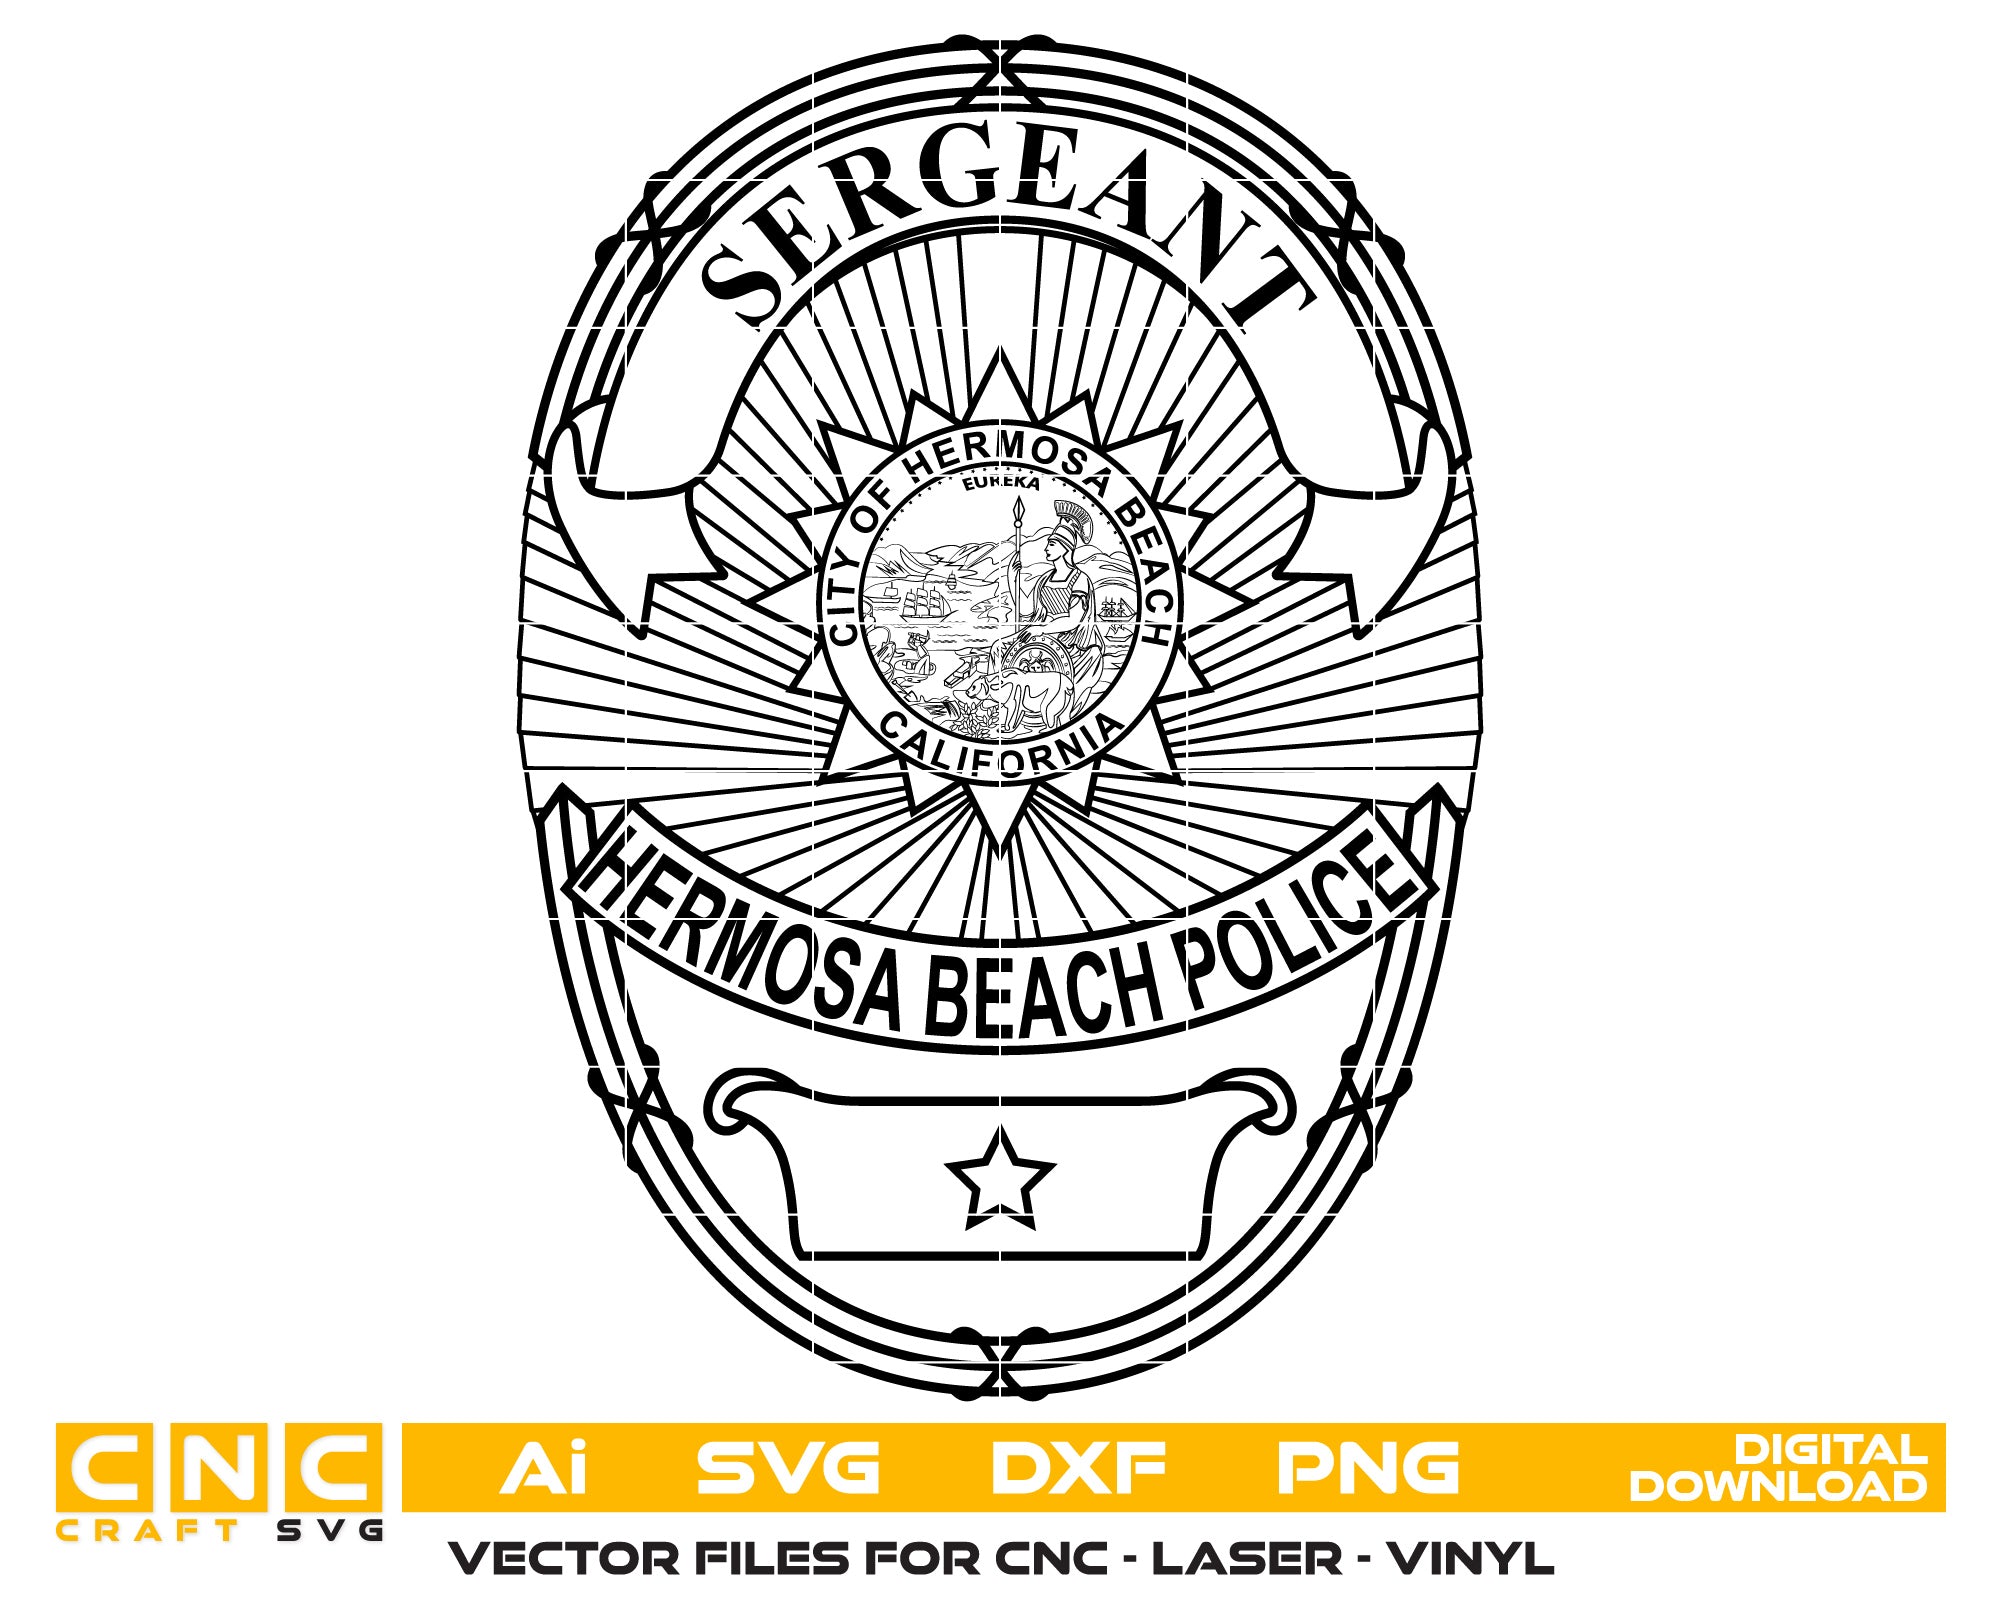 Hermosa Beach Police Sergeant Badge vector art